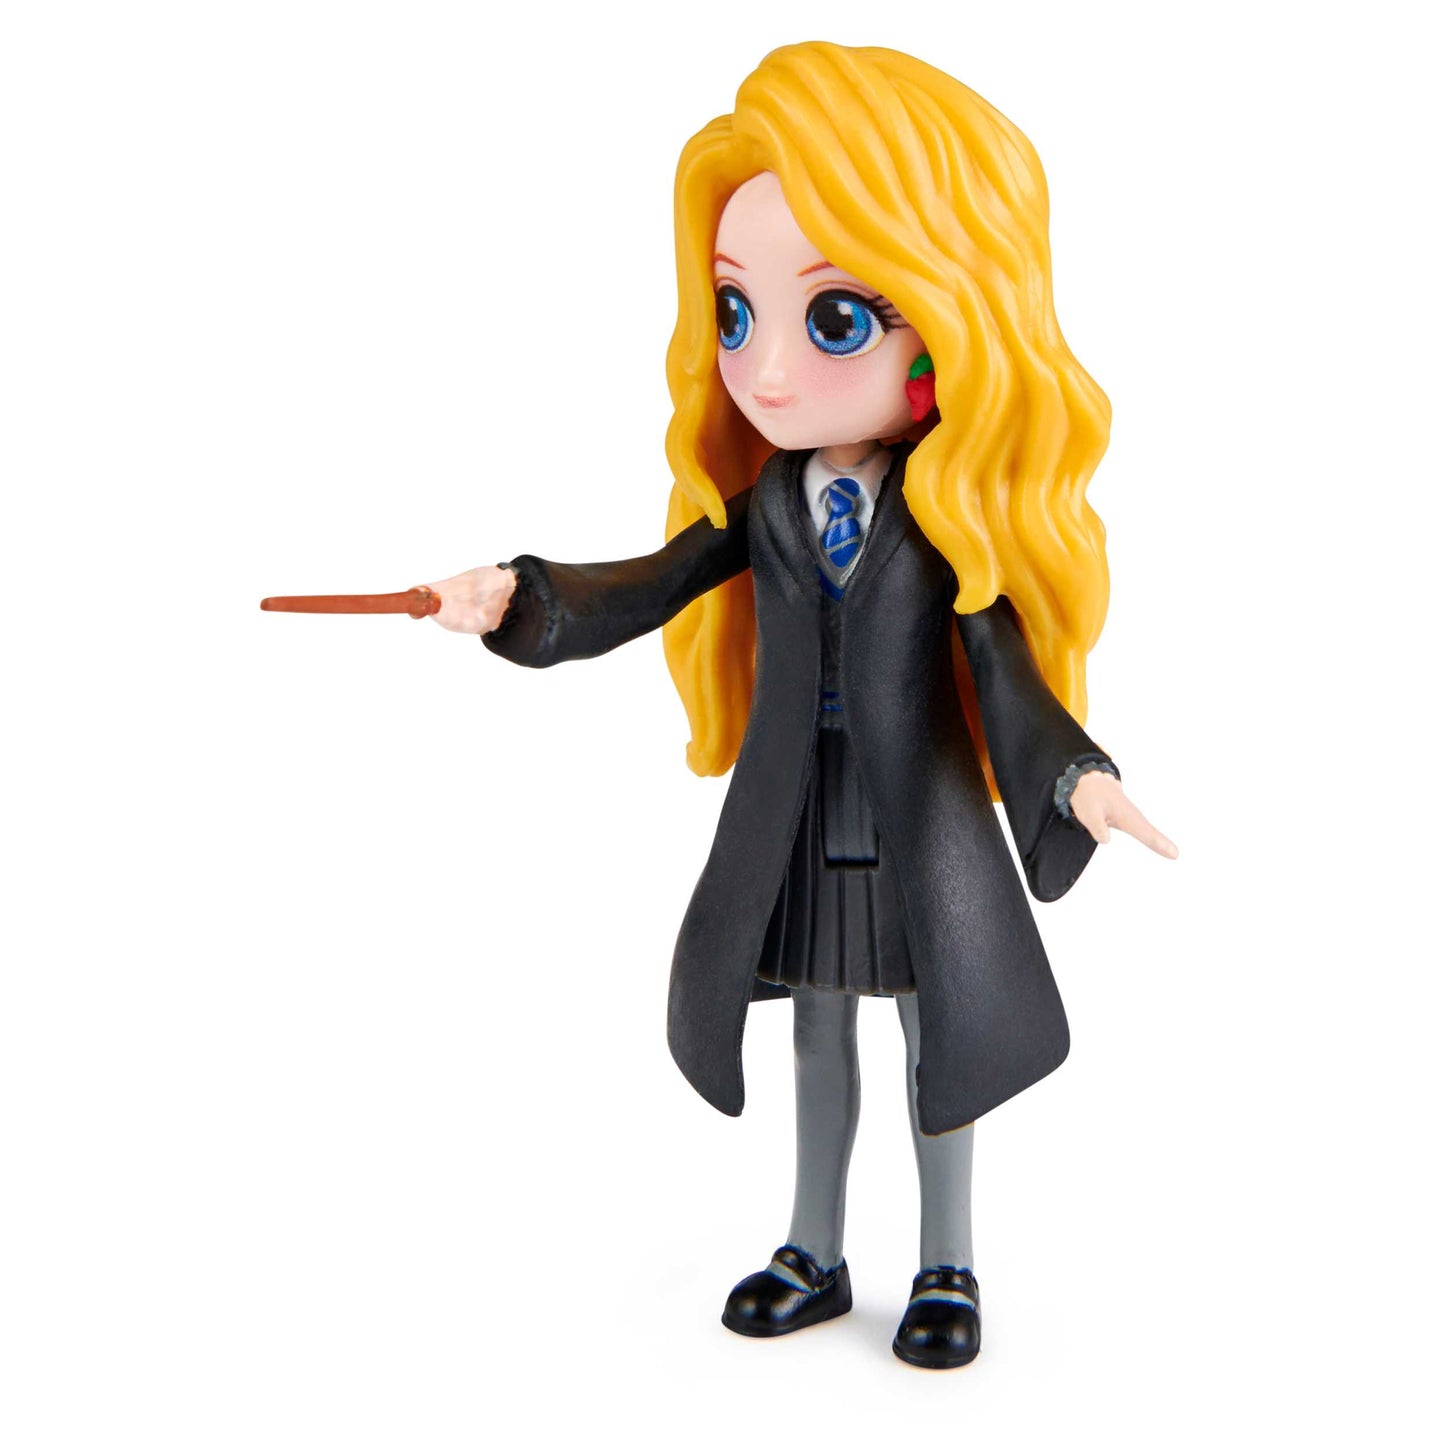 Luna Lovegood Kinder Joy Figurine from the Harry Potter Series